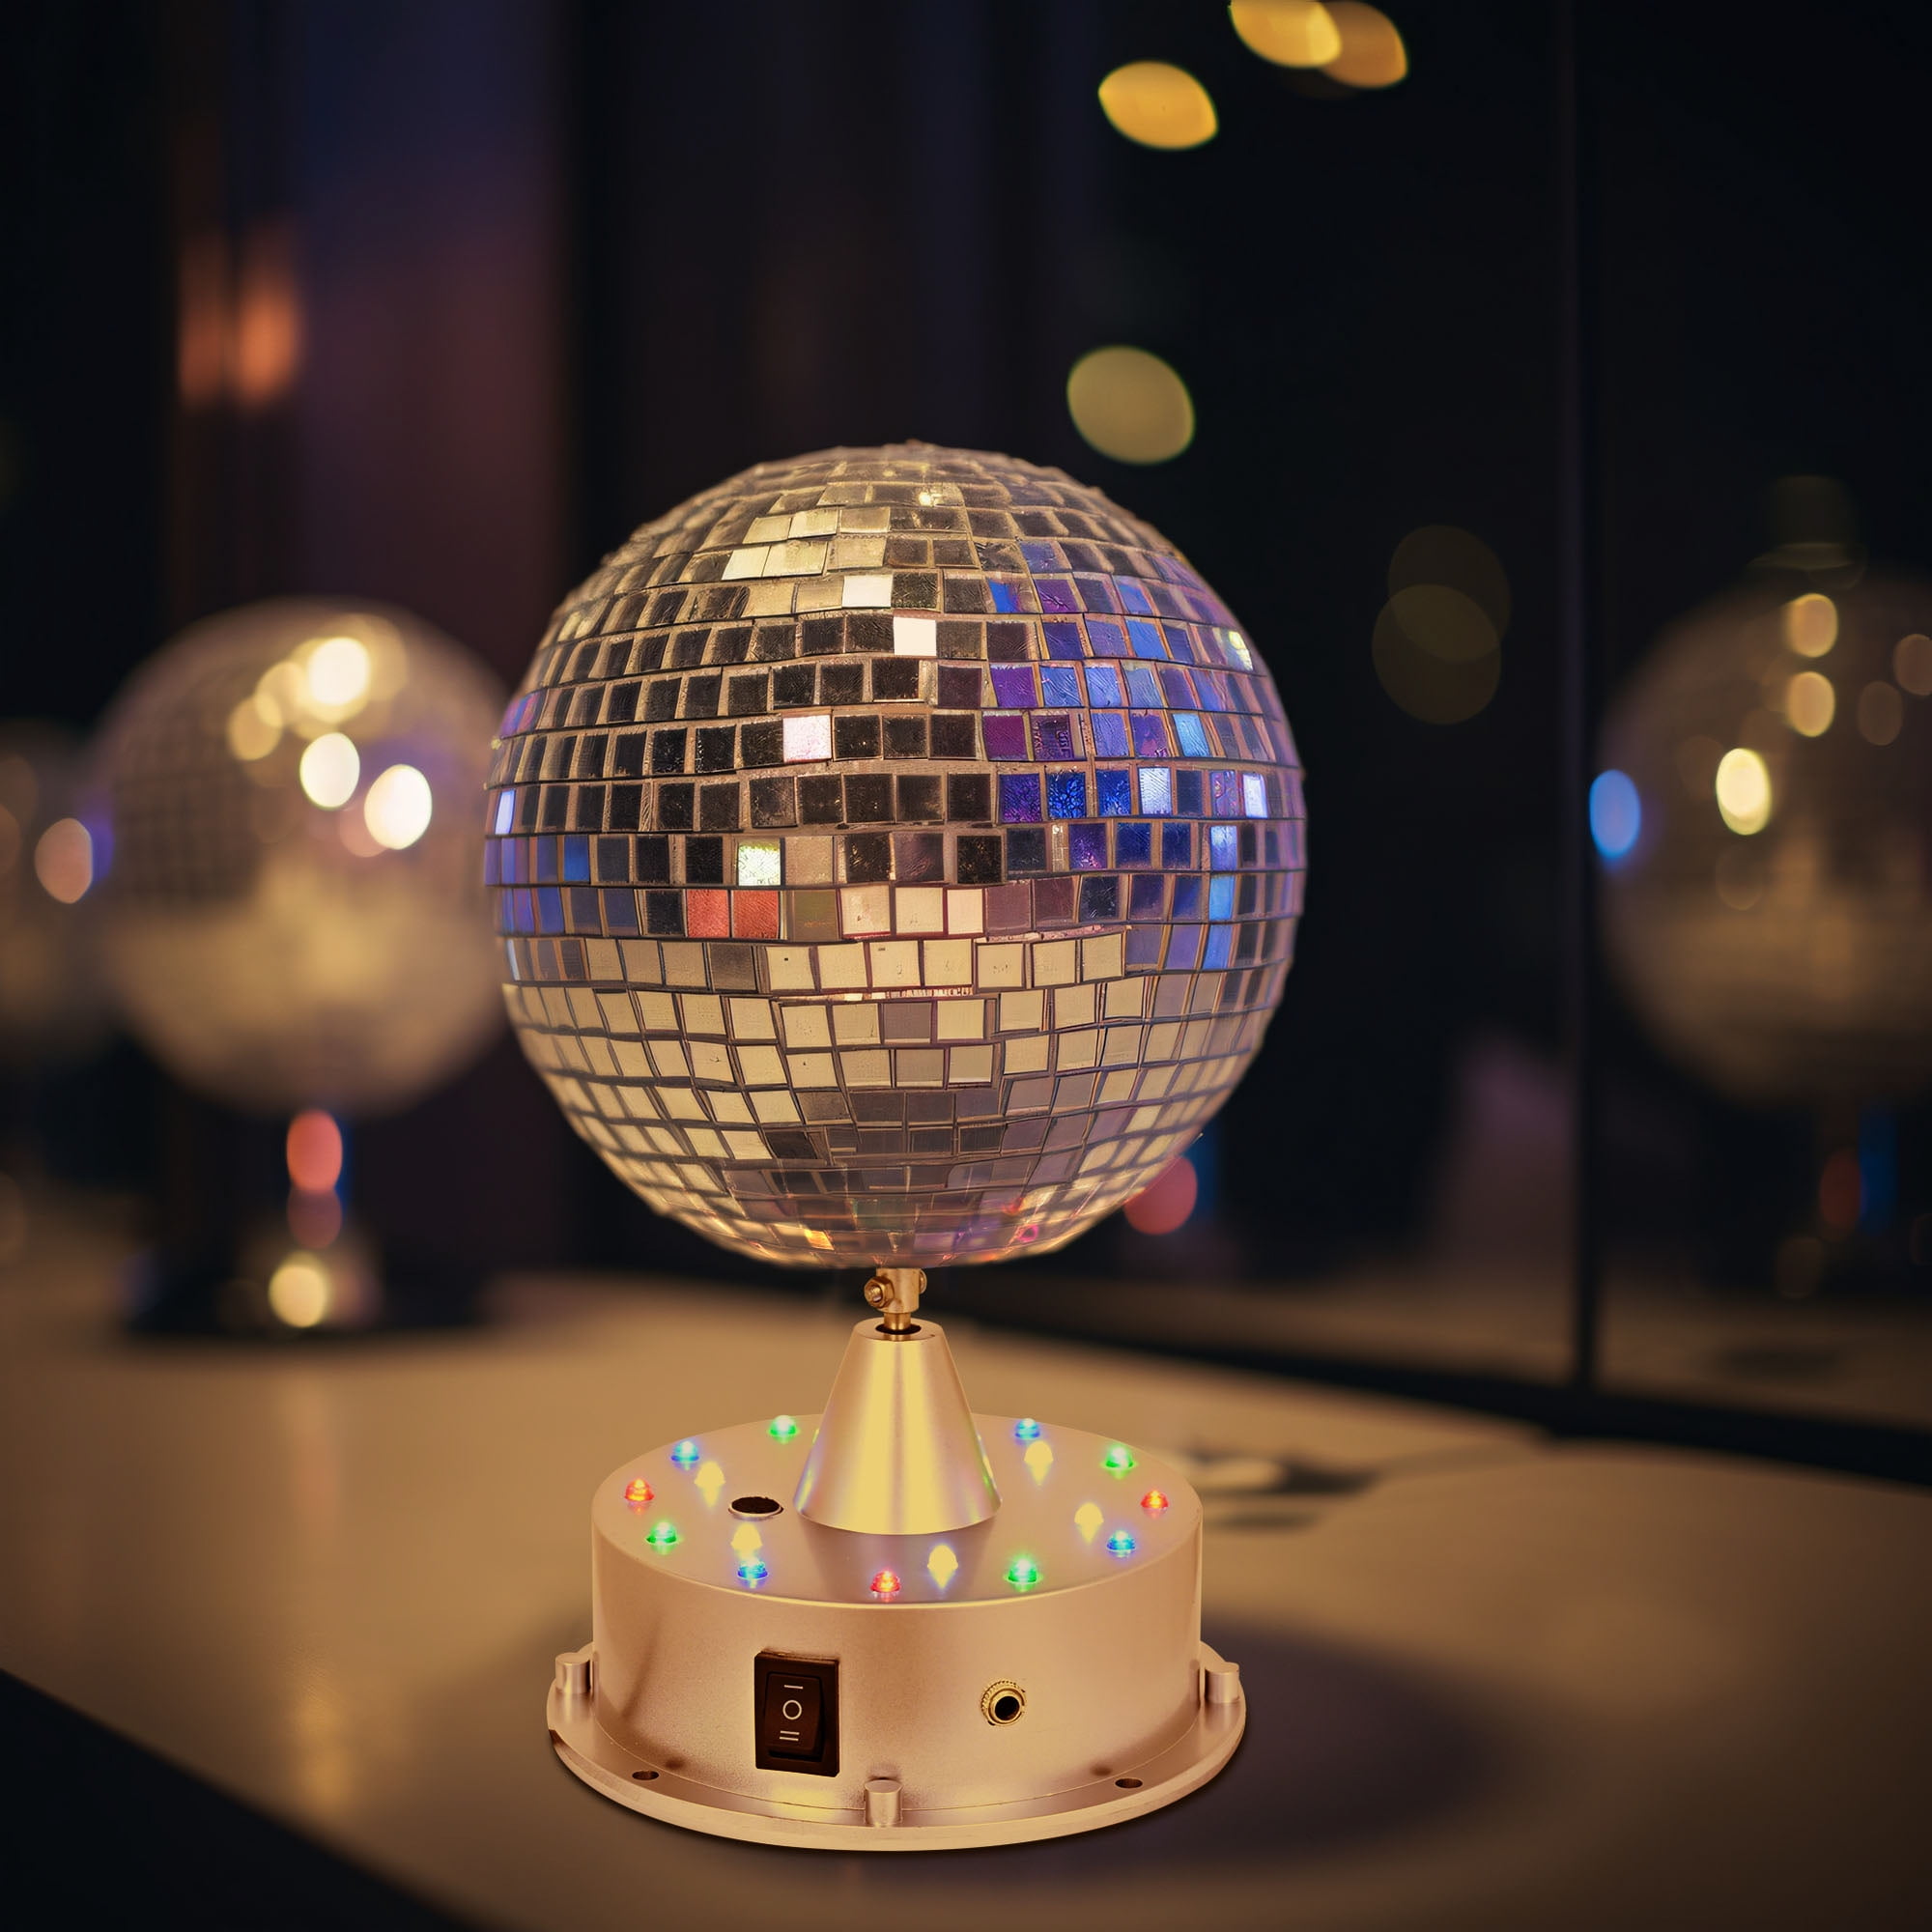 1/2/4 Packs 6 Mirror Glass Disco Ball DJ Dance Home Party Club